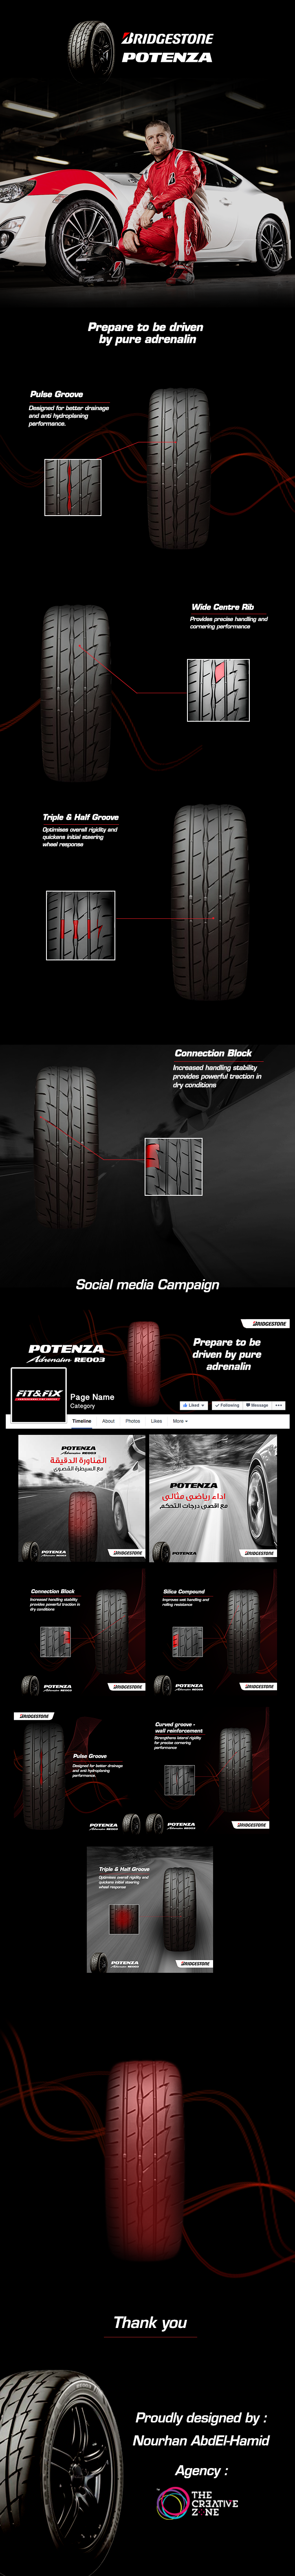 tires Bridgestone Adrenalin social media middle eat post design